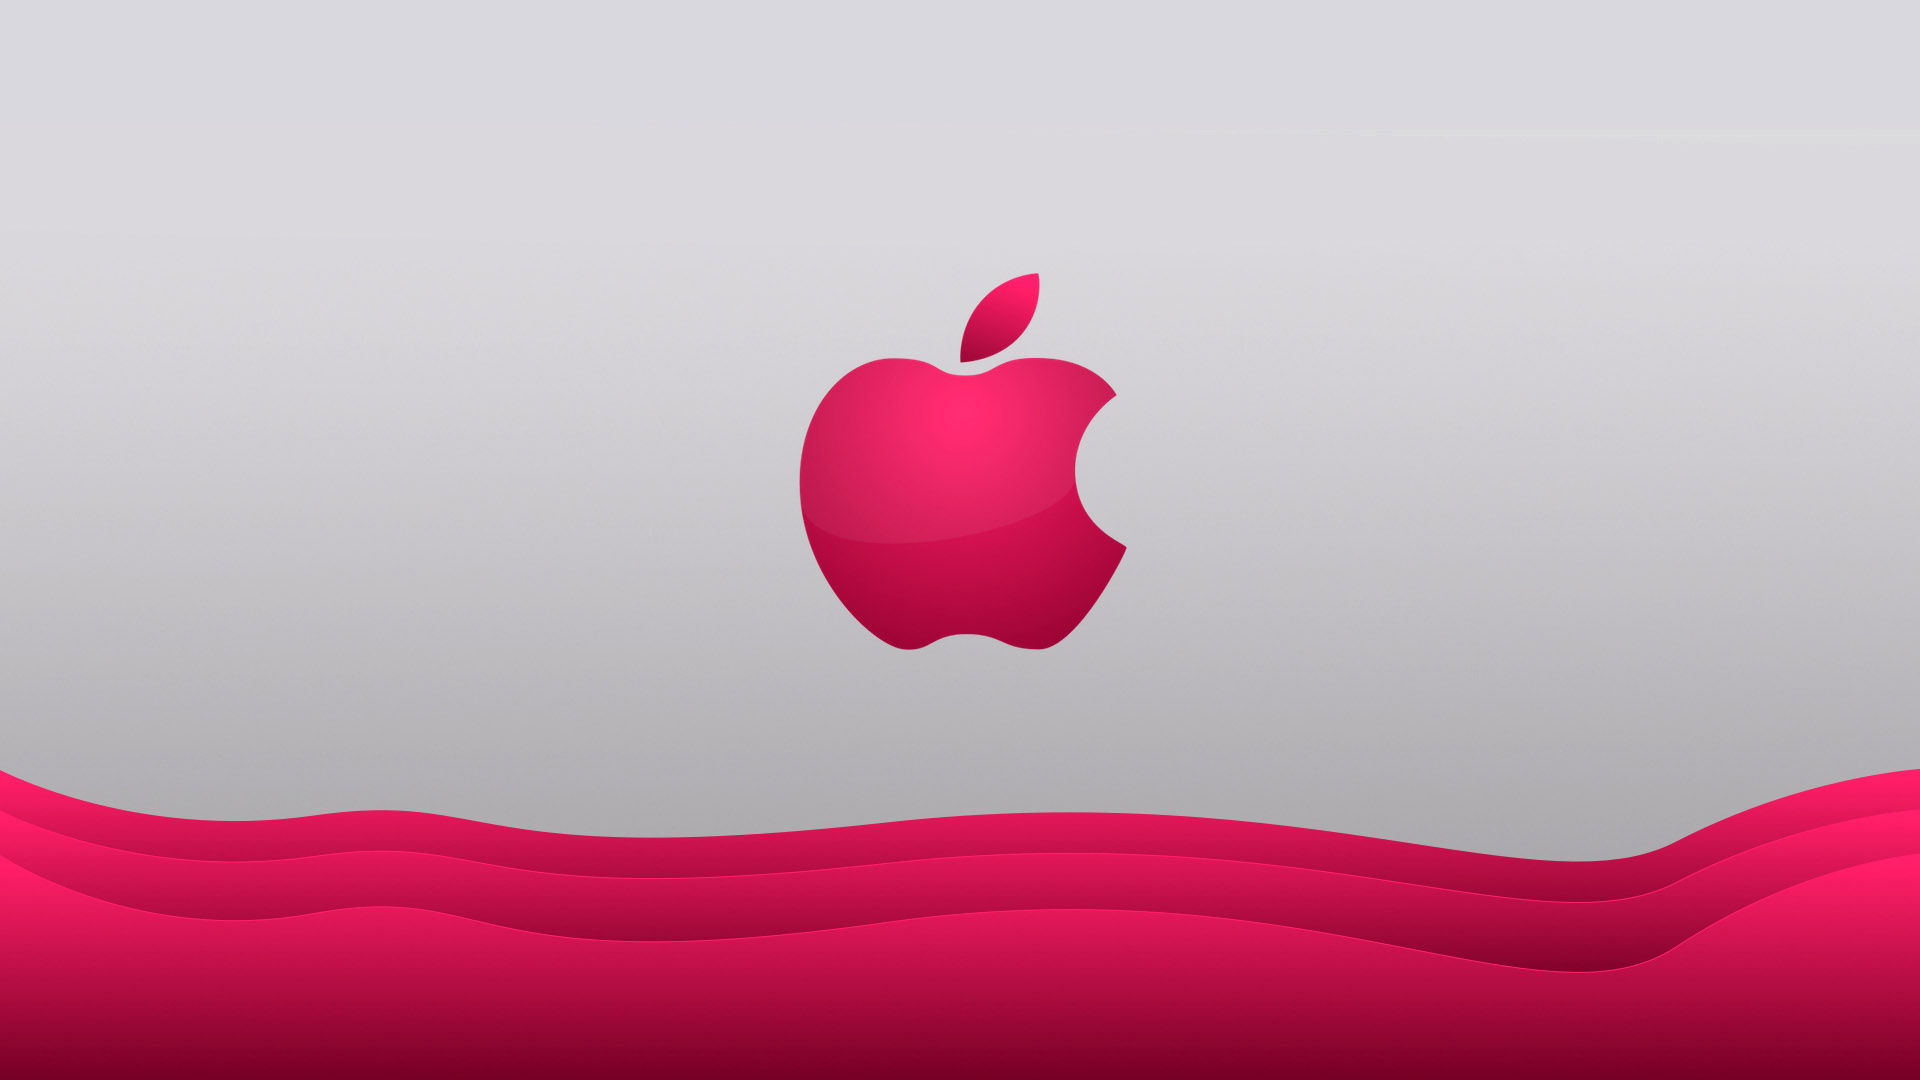 Mac Pink Wallpapers Change Your Apple Look.